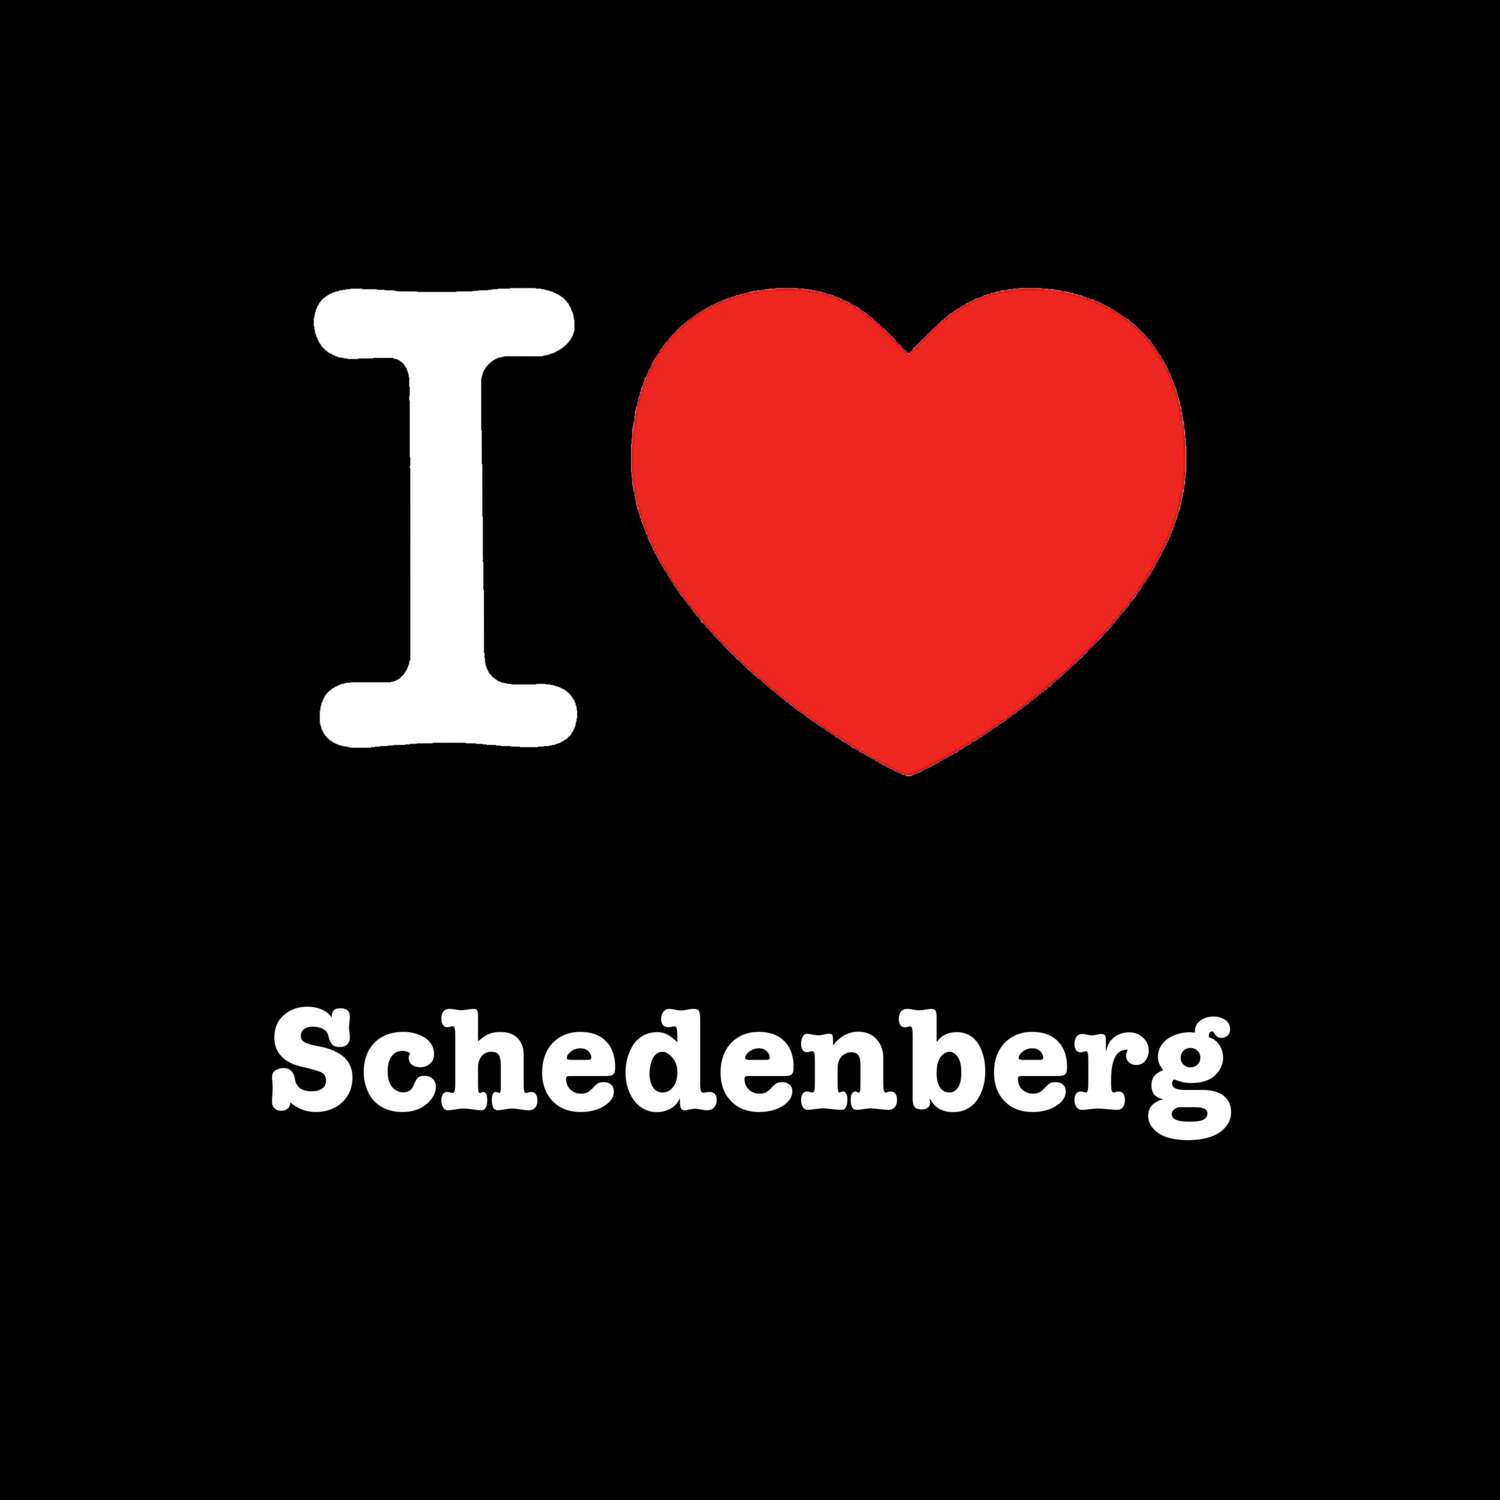 Schedenberg T-Shirt »I love«